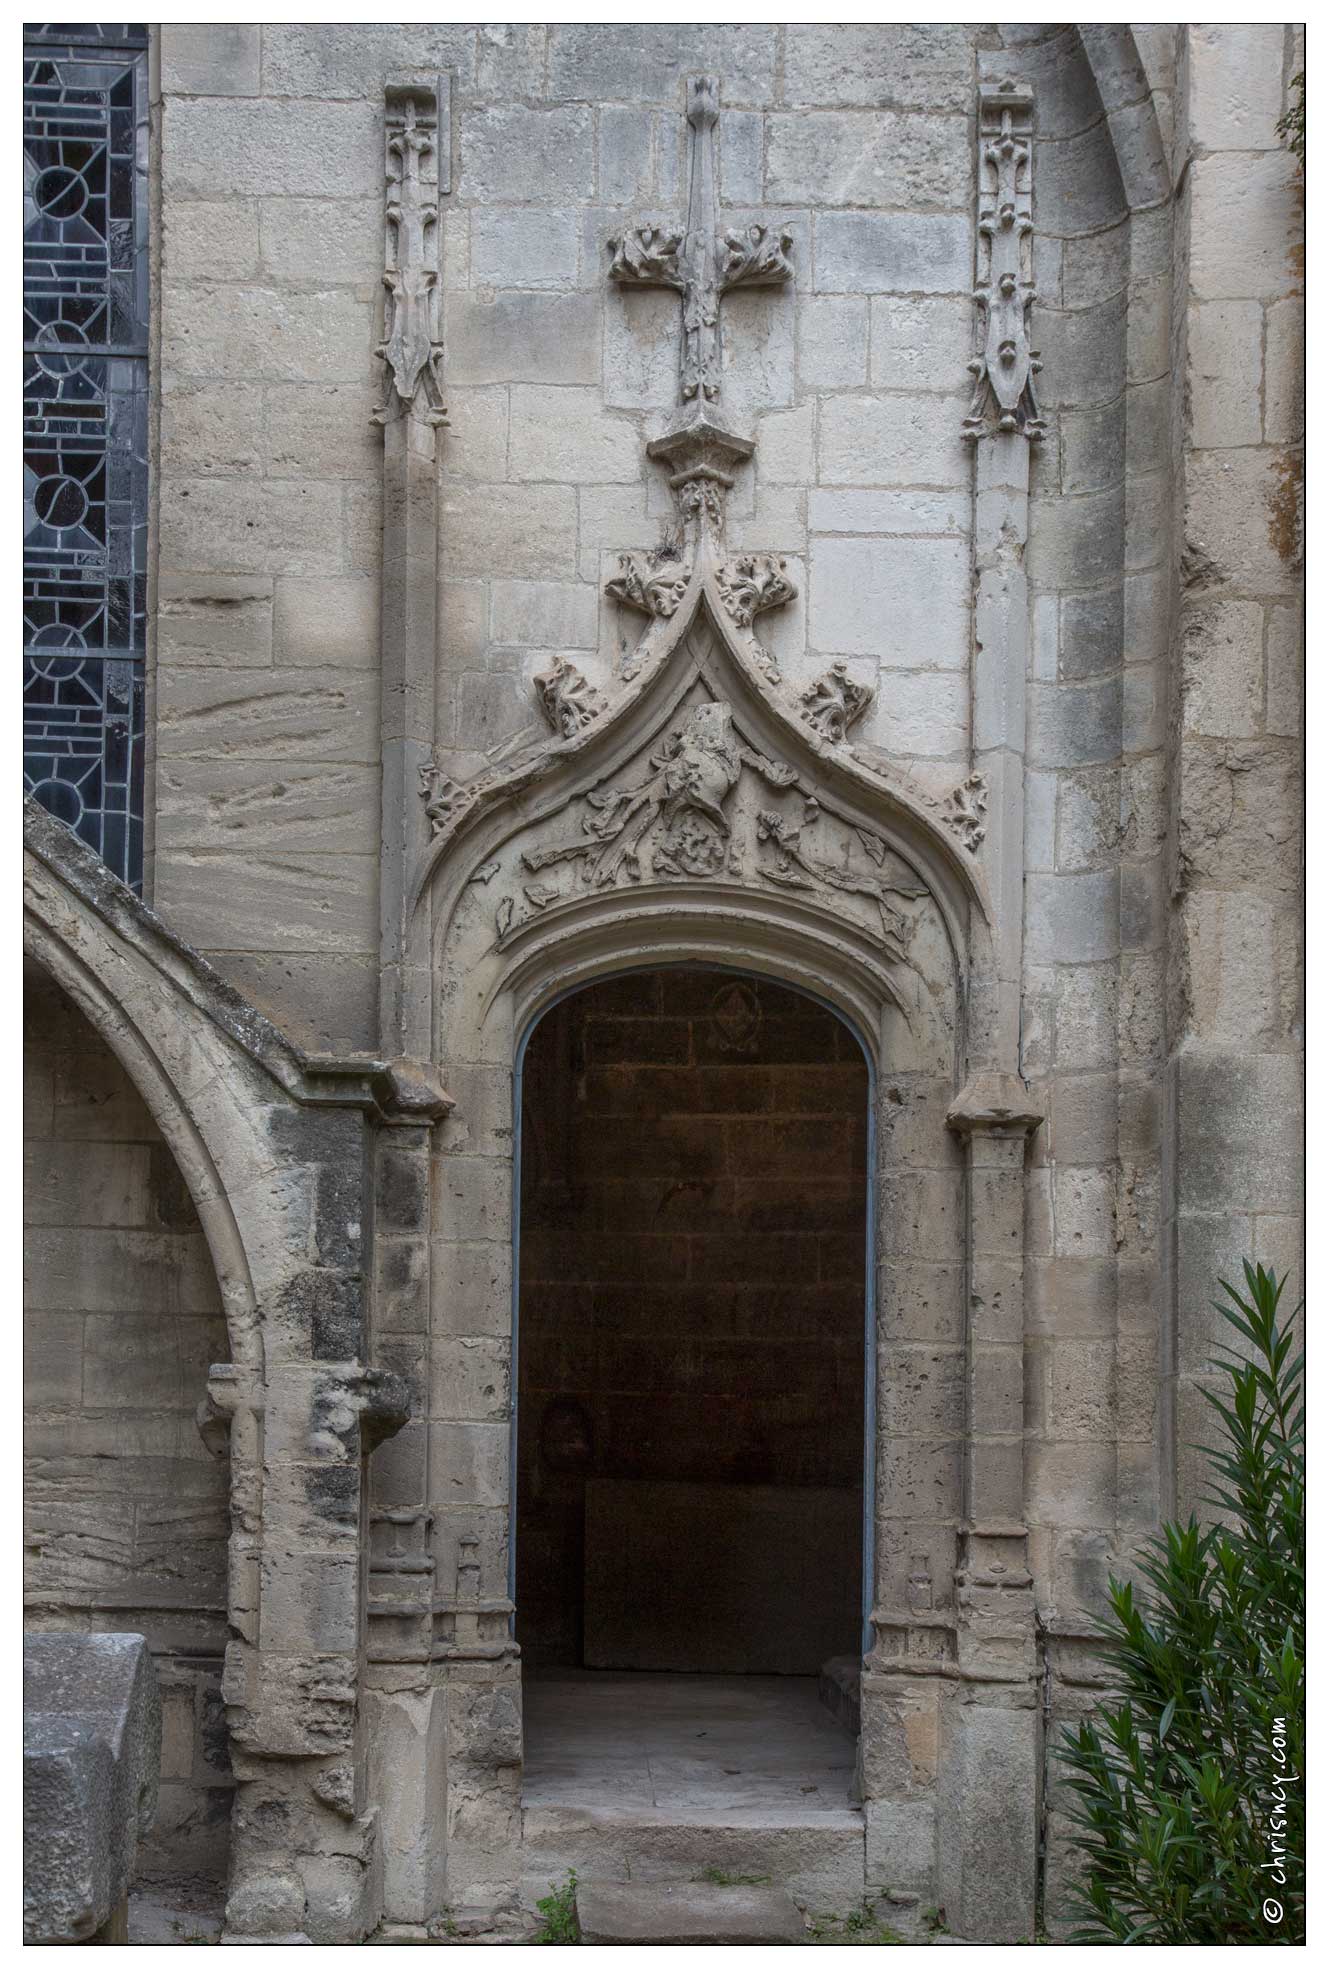 20160122-26_6596-Arles_Les_Alyscamps_Eglise_St_Honorat.jpg